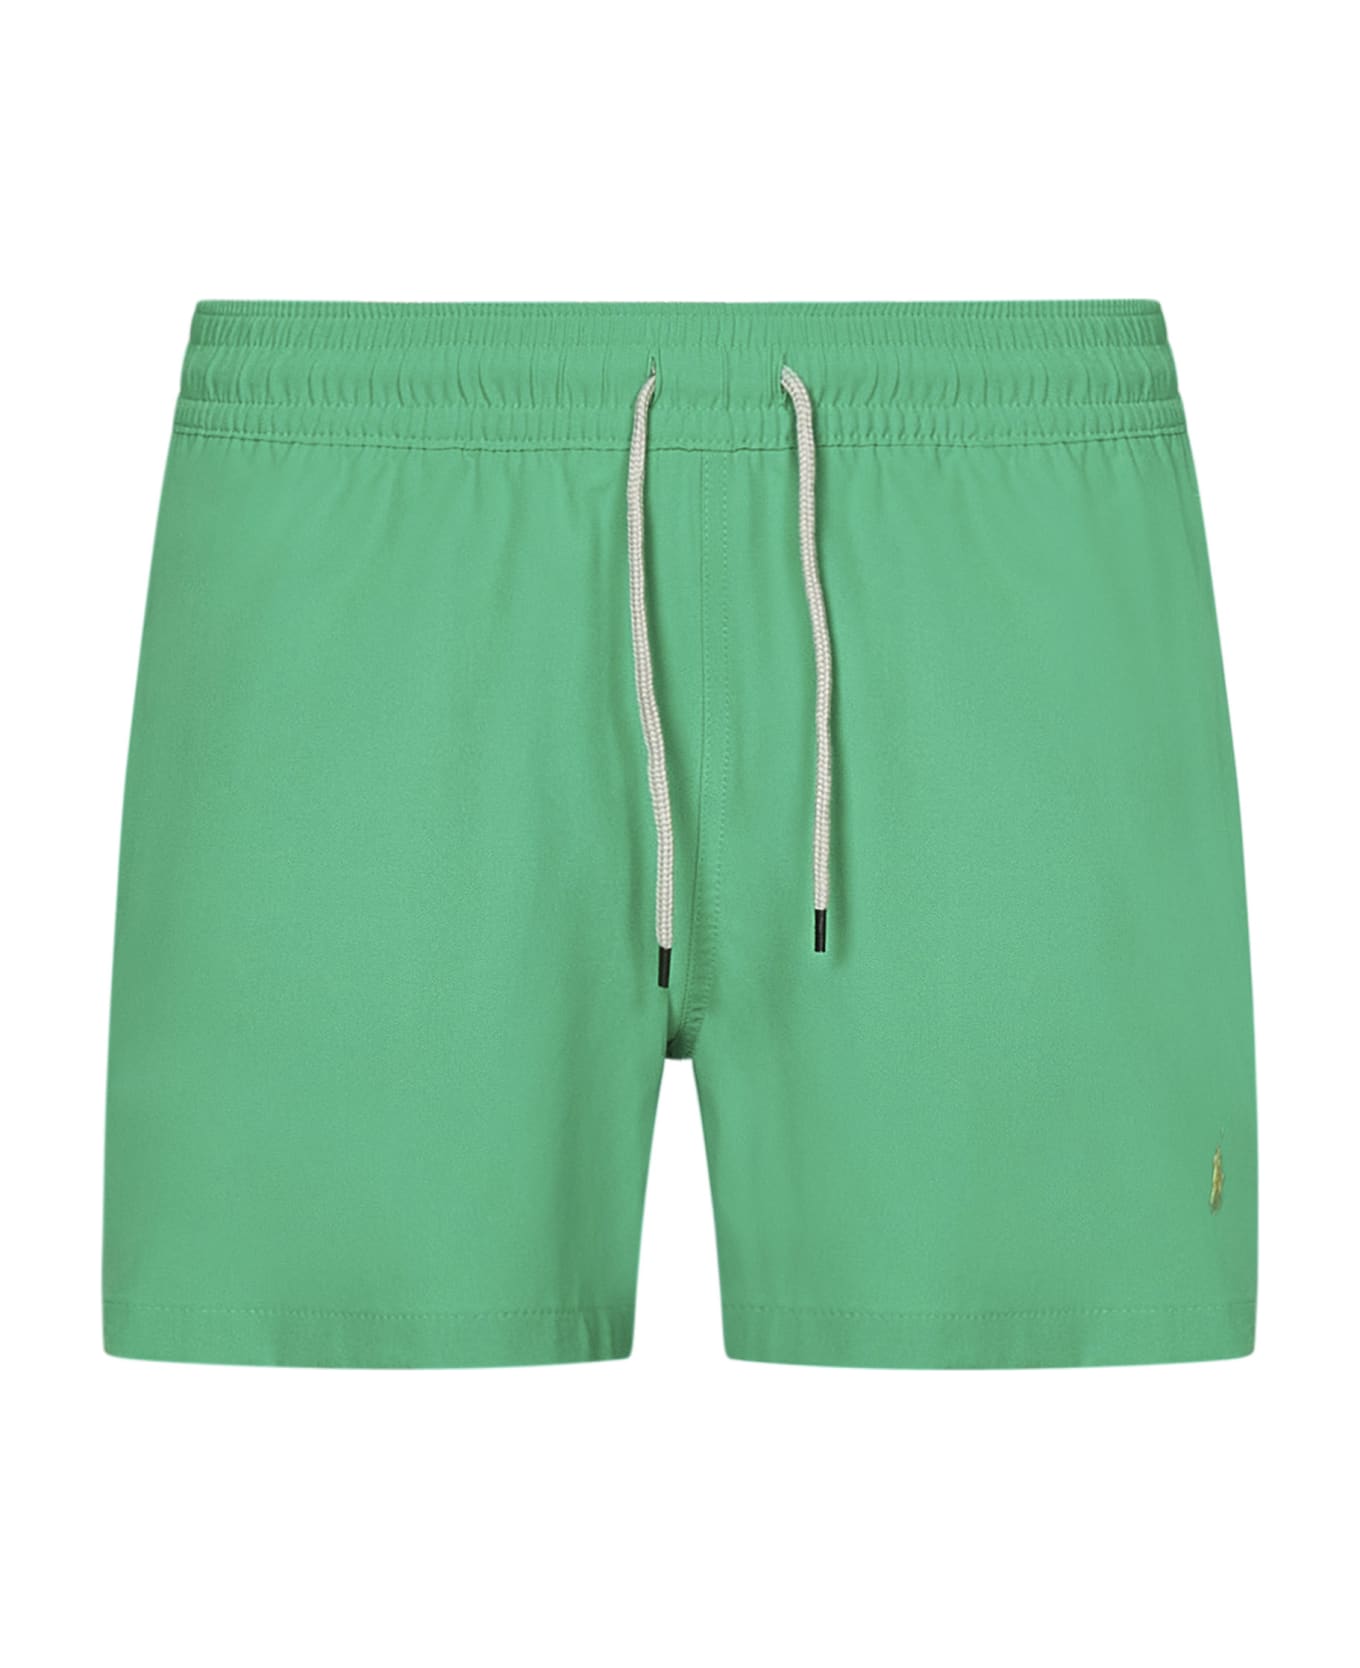 Polo Ralph Lauren Traveler Swimsuit - Green